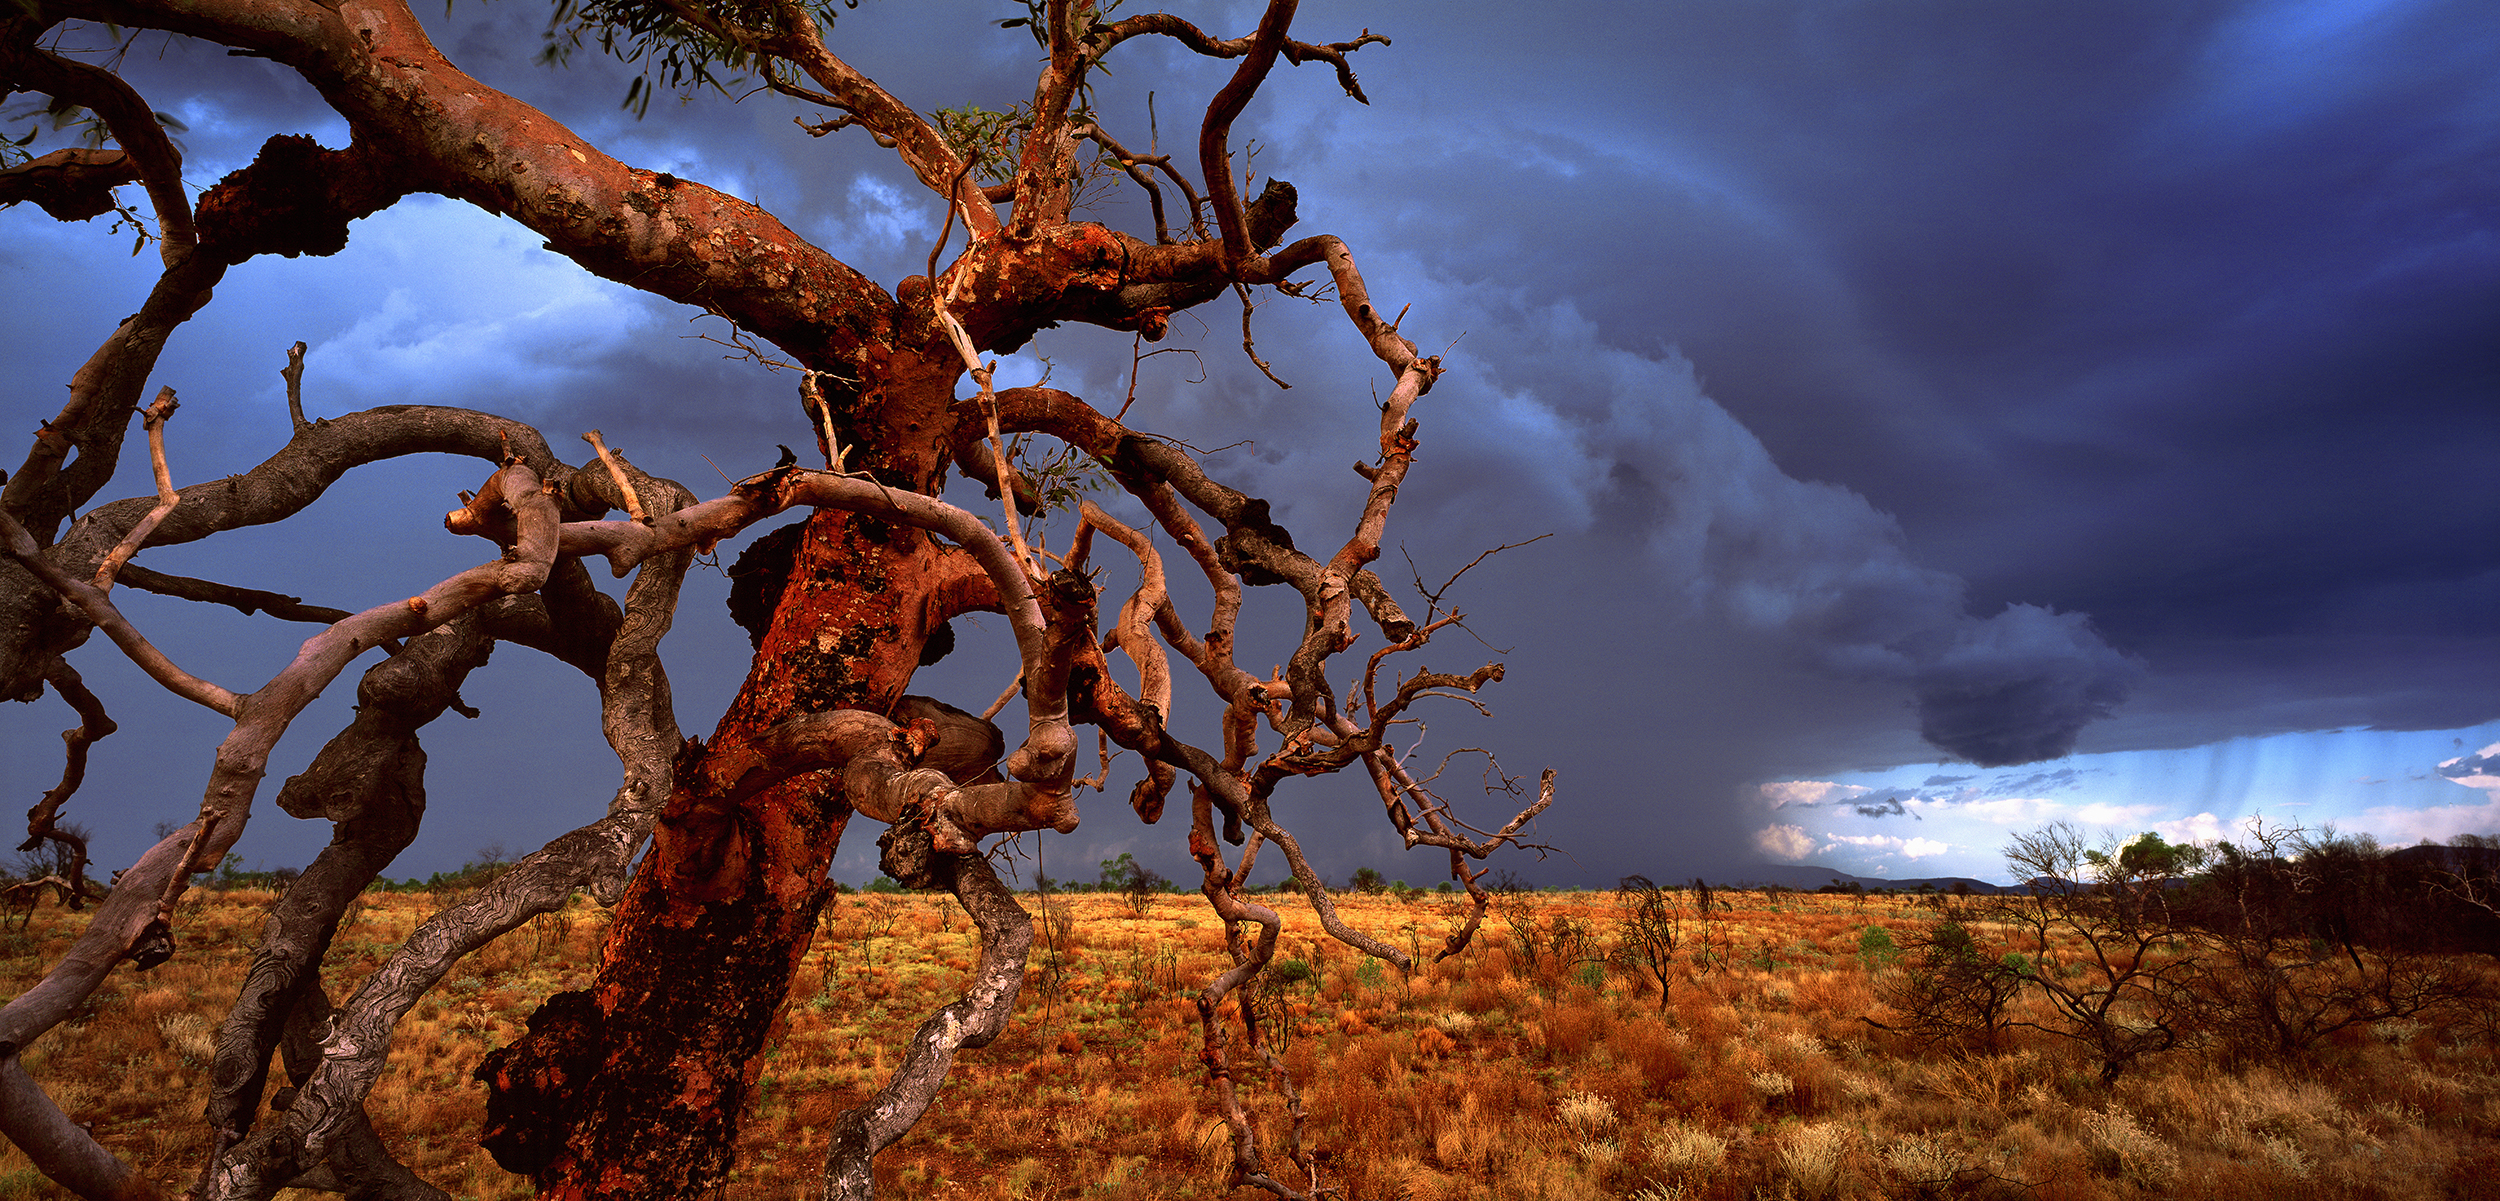  Build-up Storm, Hamersley Range, Paraburdoo, Western Australia, 2006.&nbsp; Edition of 5. 